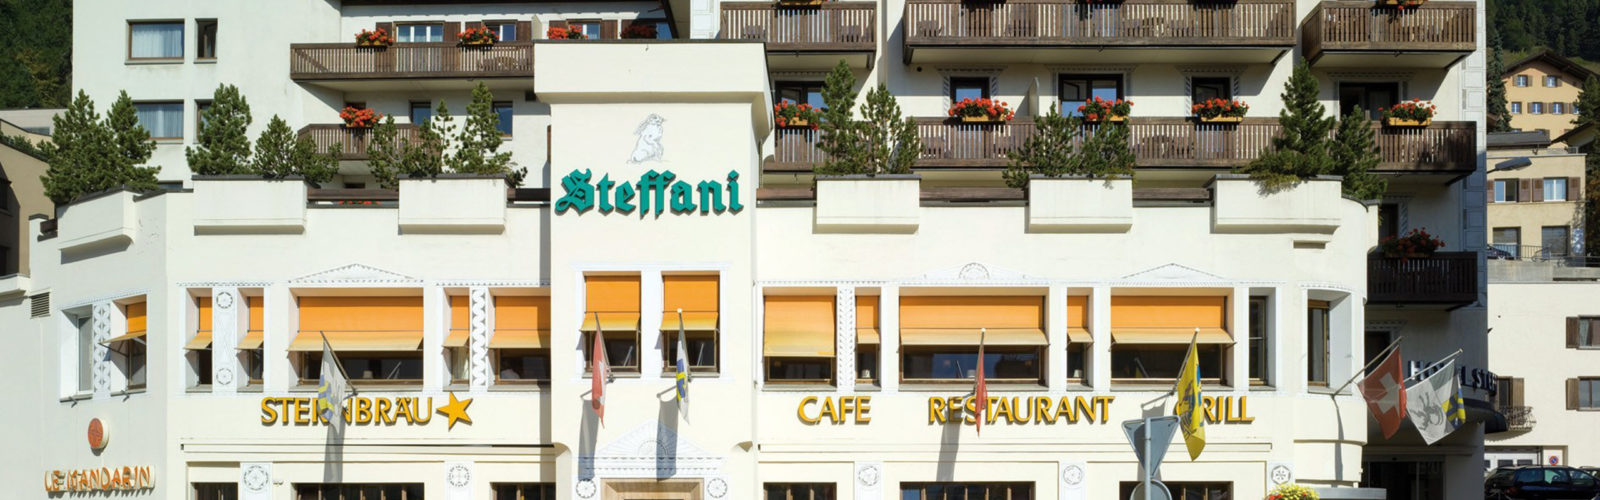 hotel-steffani-exterior